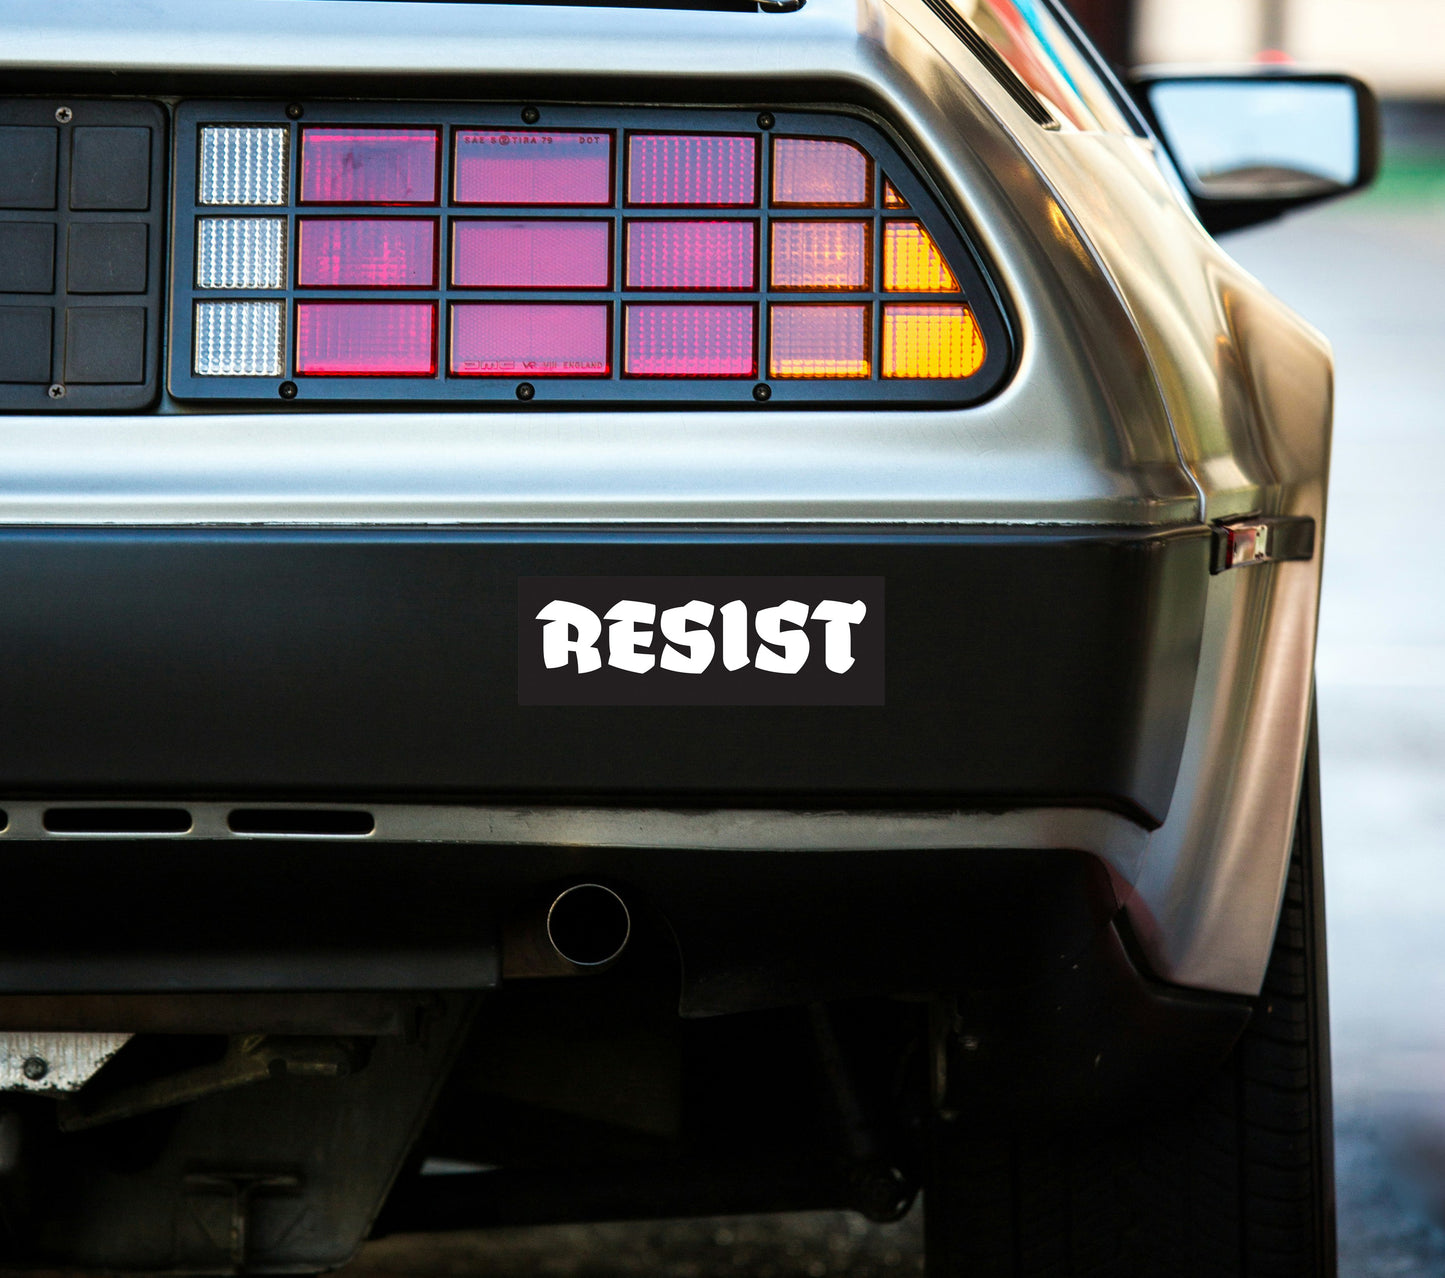 Resist Bumper Sticker